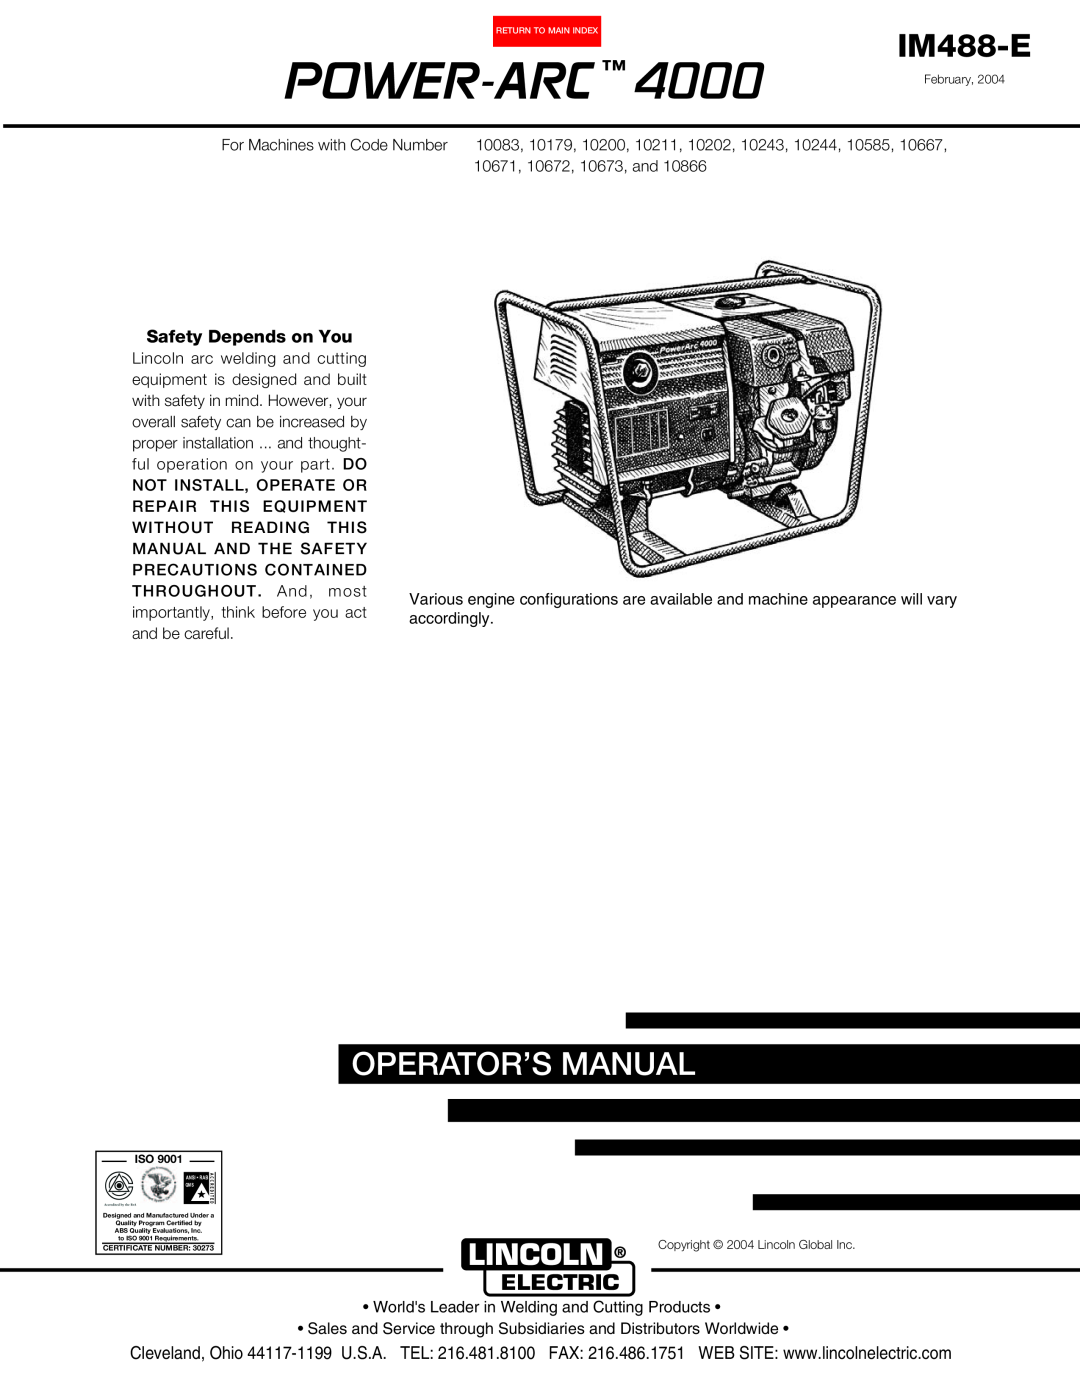 Lincoln POWER-ARC 4000 manual Power-Arc, IM488-E, Operator’S Manual 